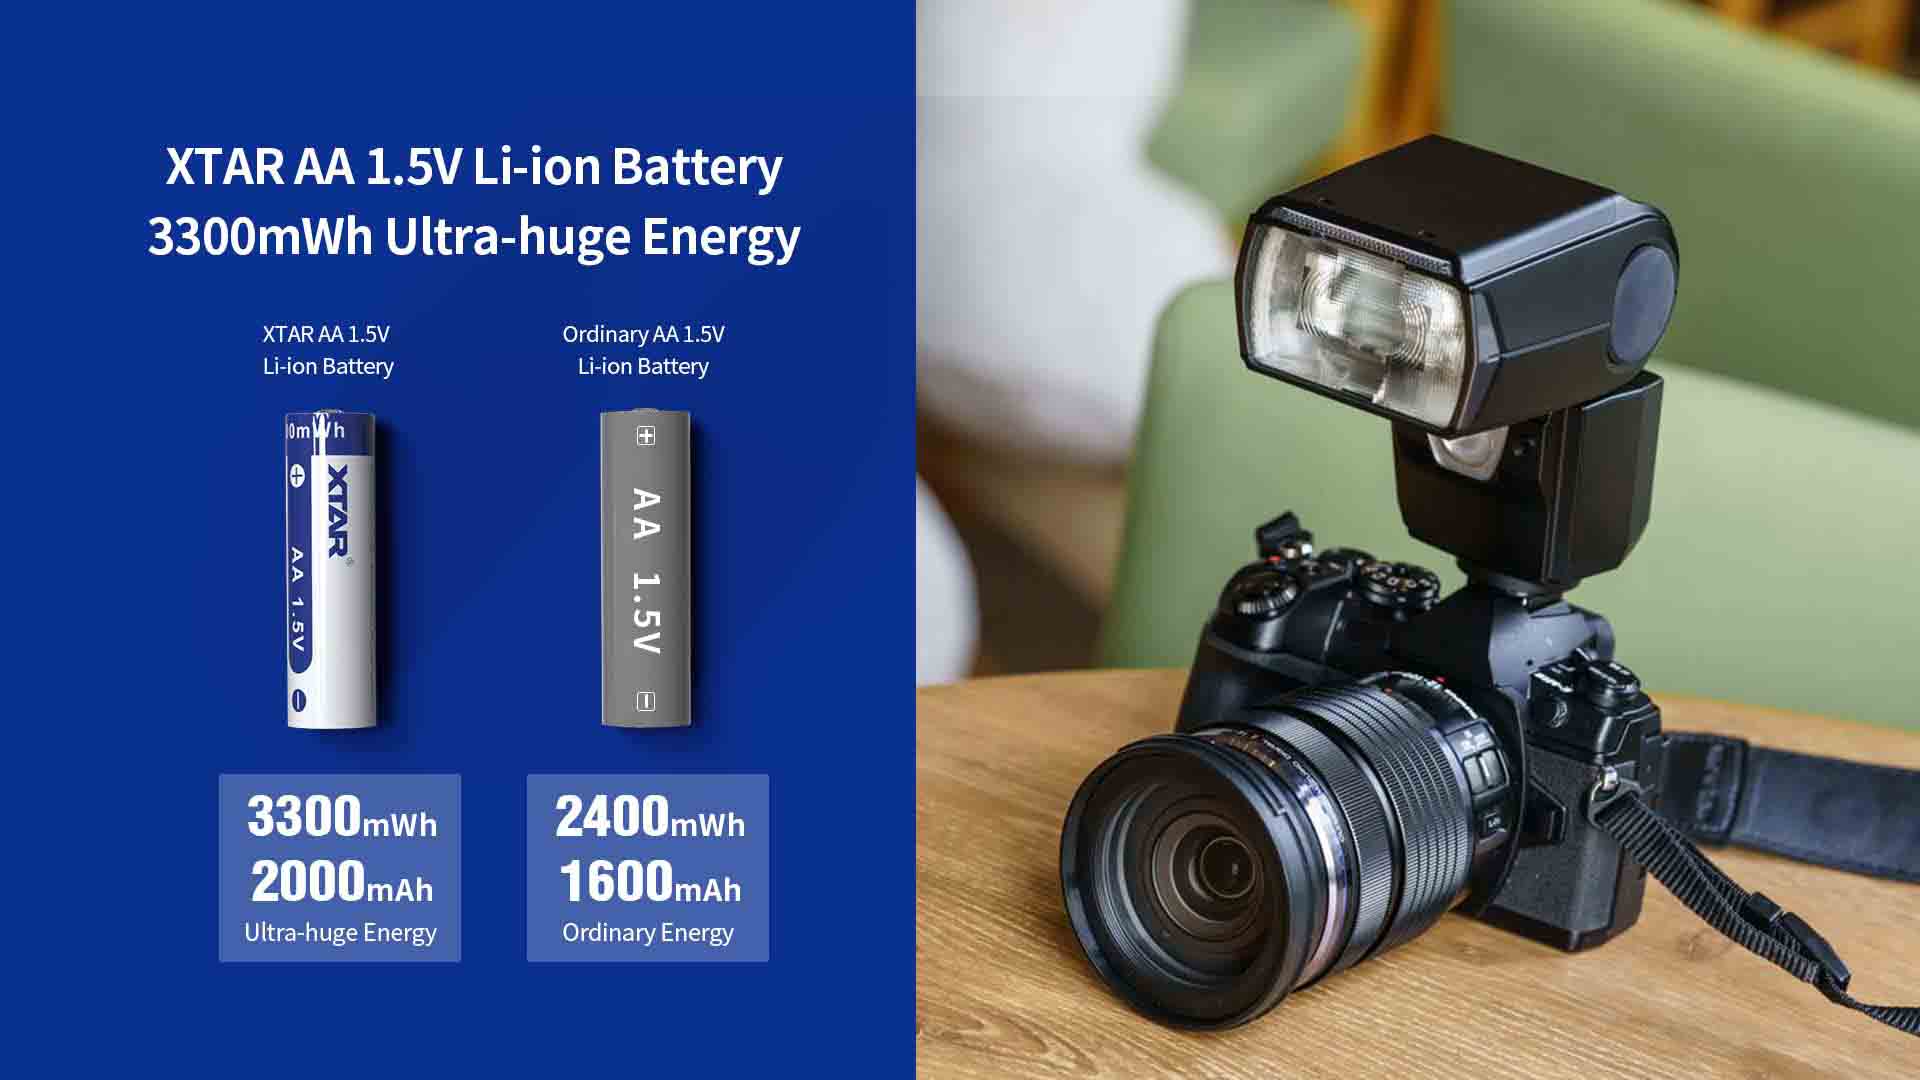 XTAR AA 1.5V Li-ion battery has a huge energy of 3300mWh.